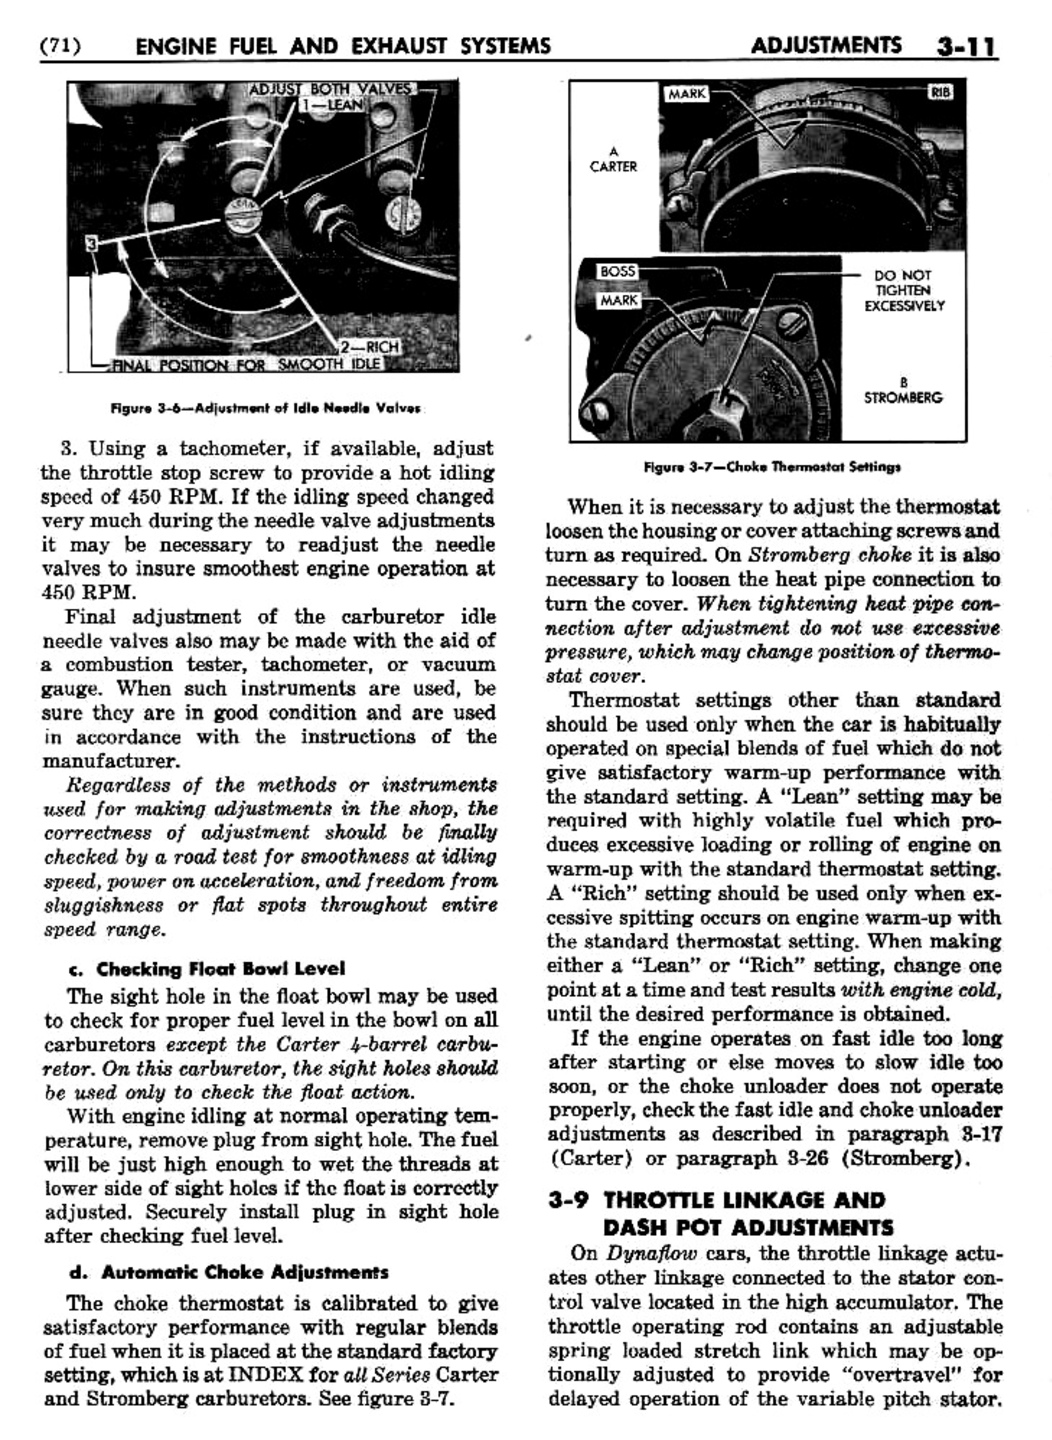 n_04 1955 Buick Shop Manual - Engine Fuel & Exhaust-011-011.jpg